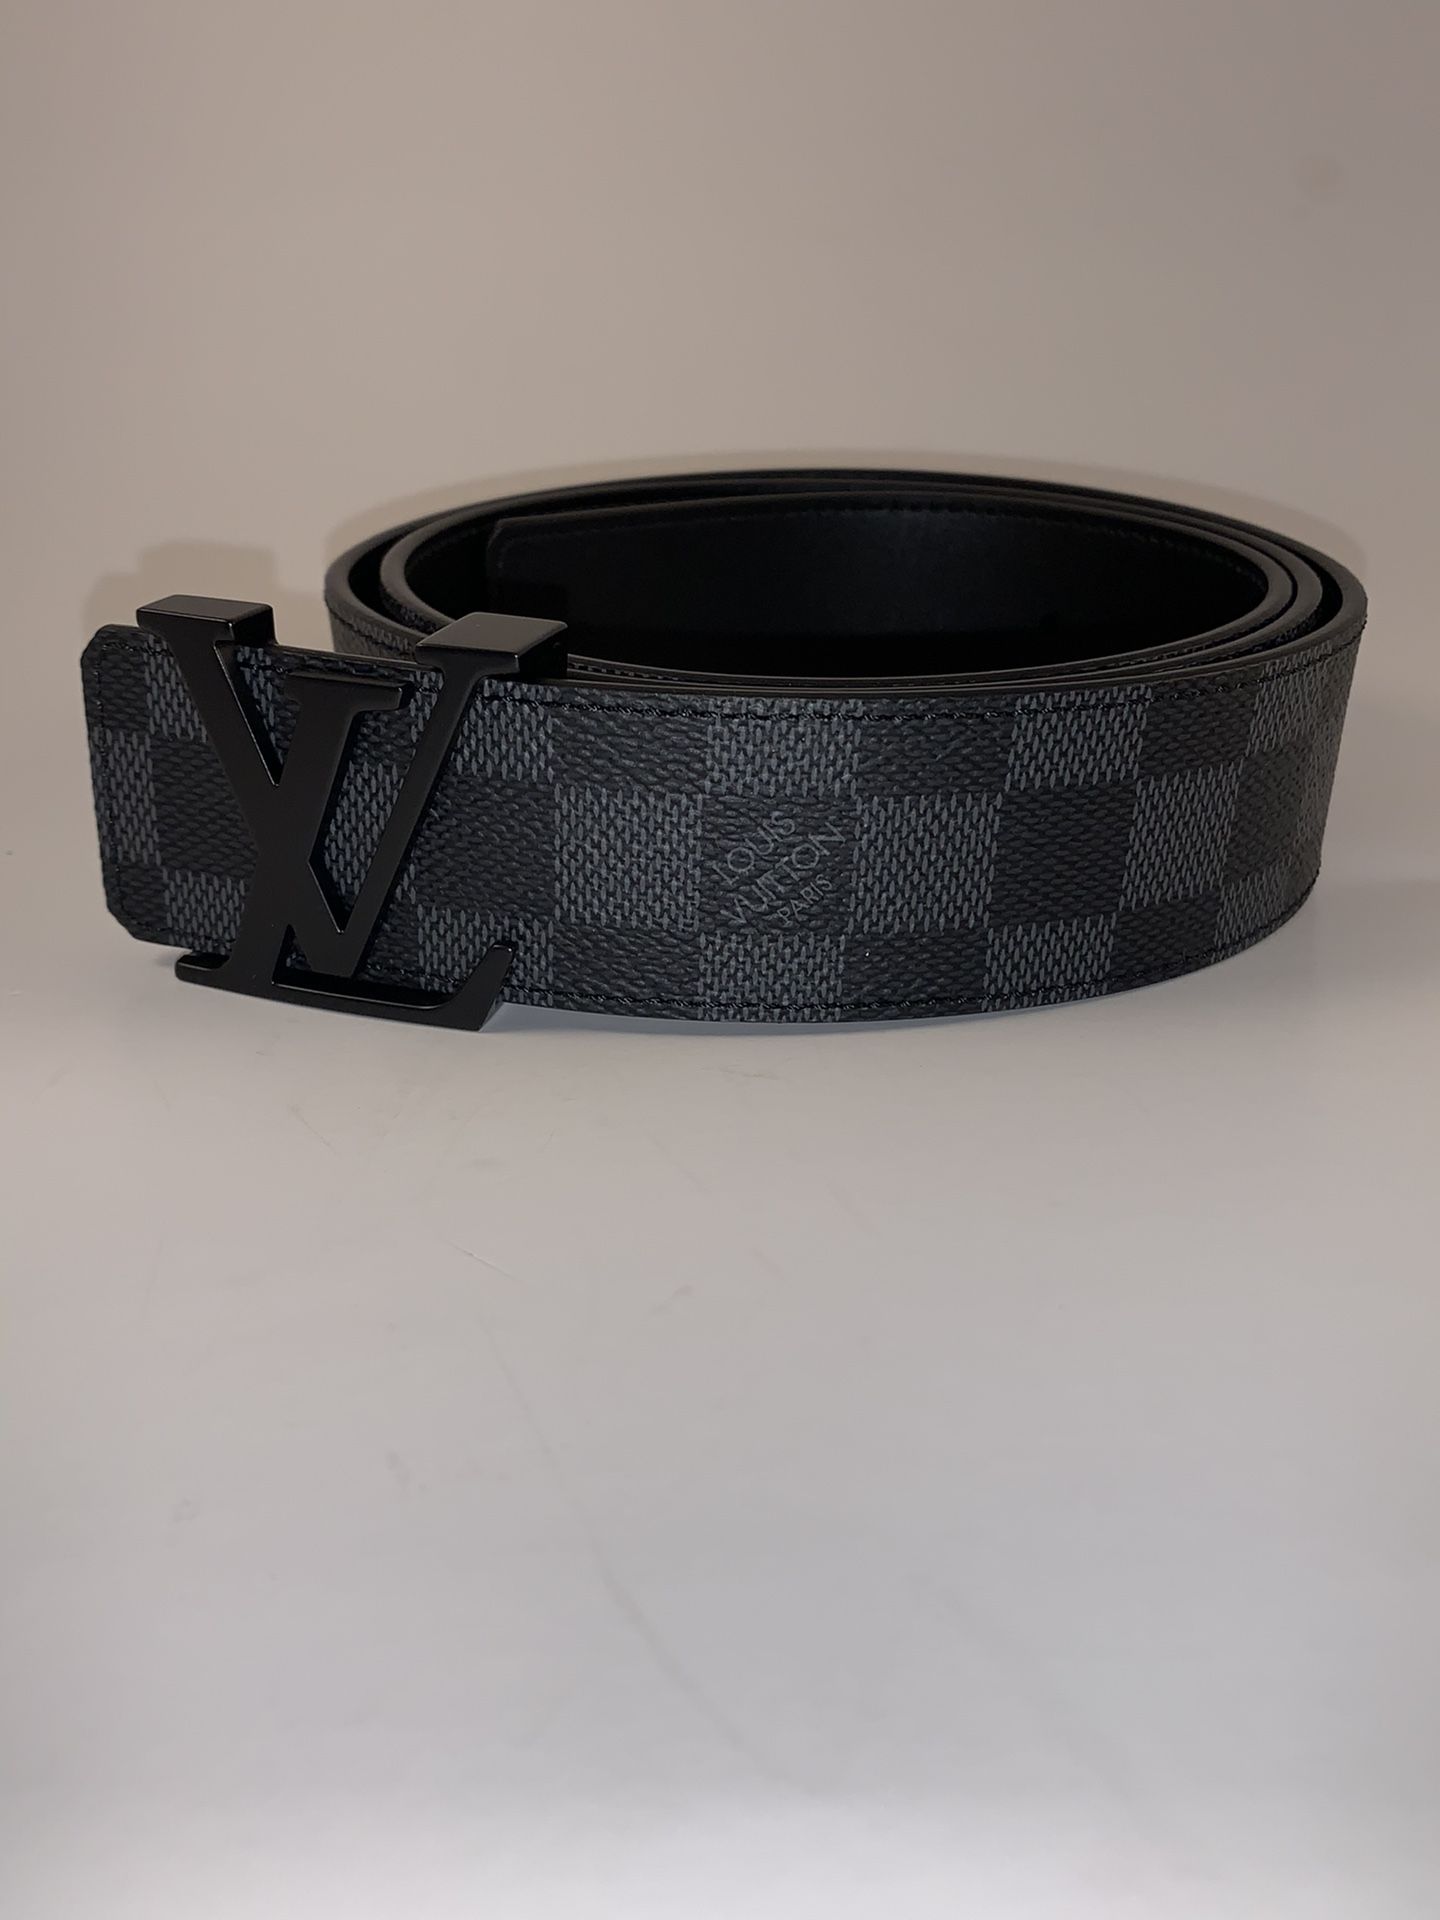 Louis Vuitton belt size 38